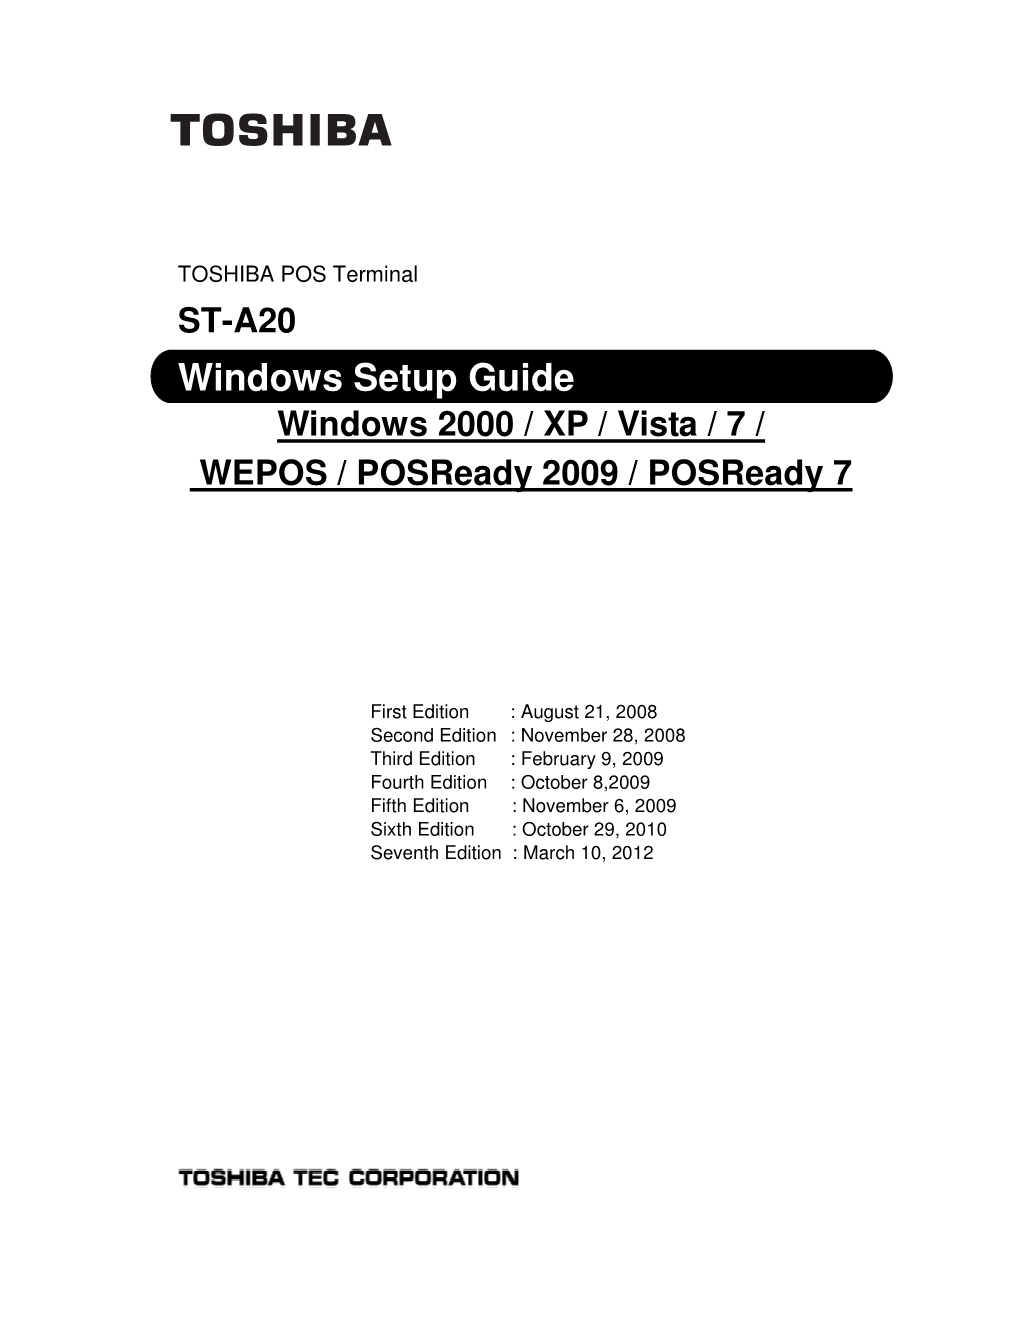 ST-A20 Windows Setup Guide Windows 2000 / XP / Vista / 7 / WEPOS / Posready 2009 / Posready 7